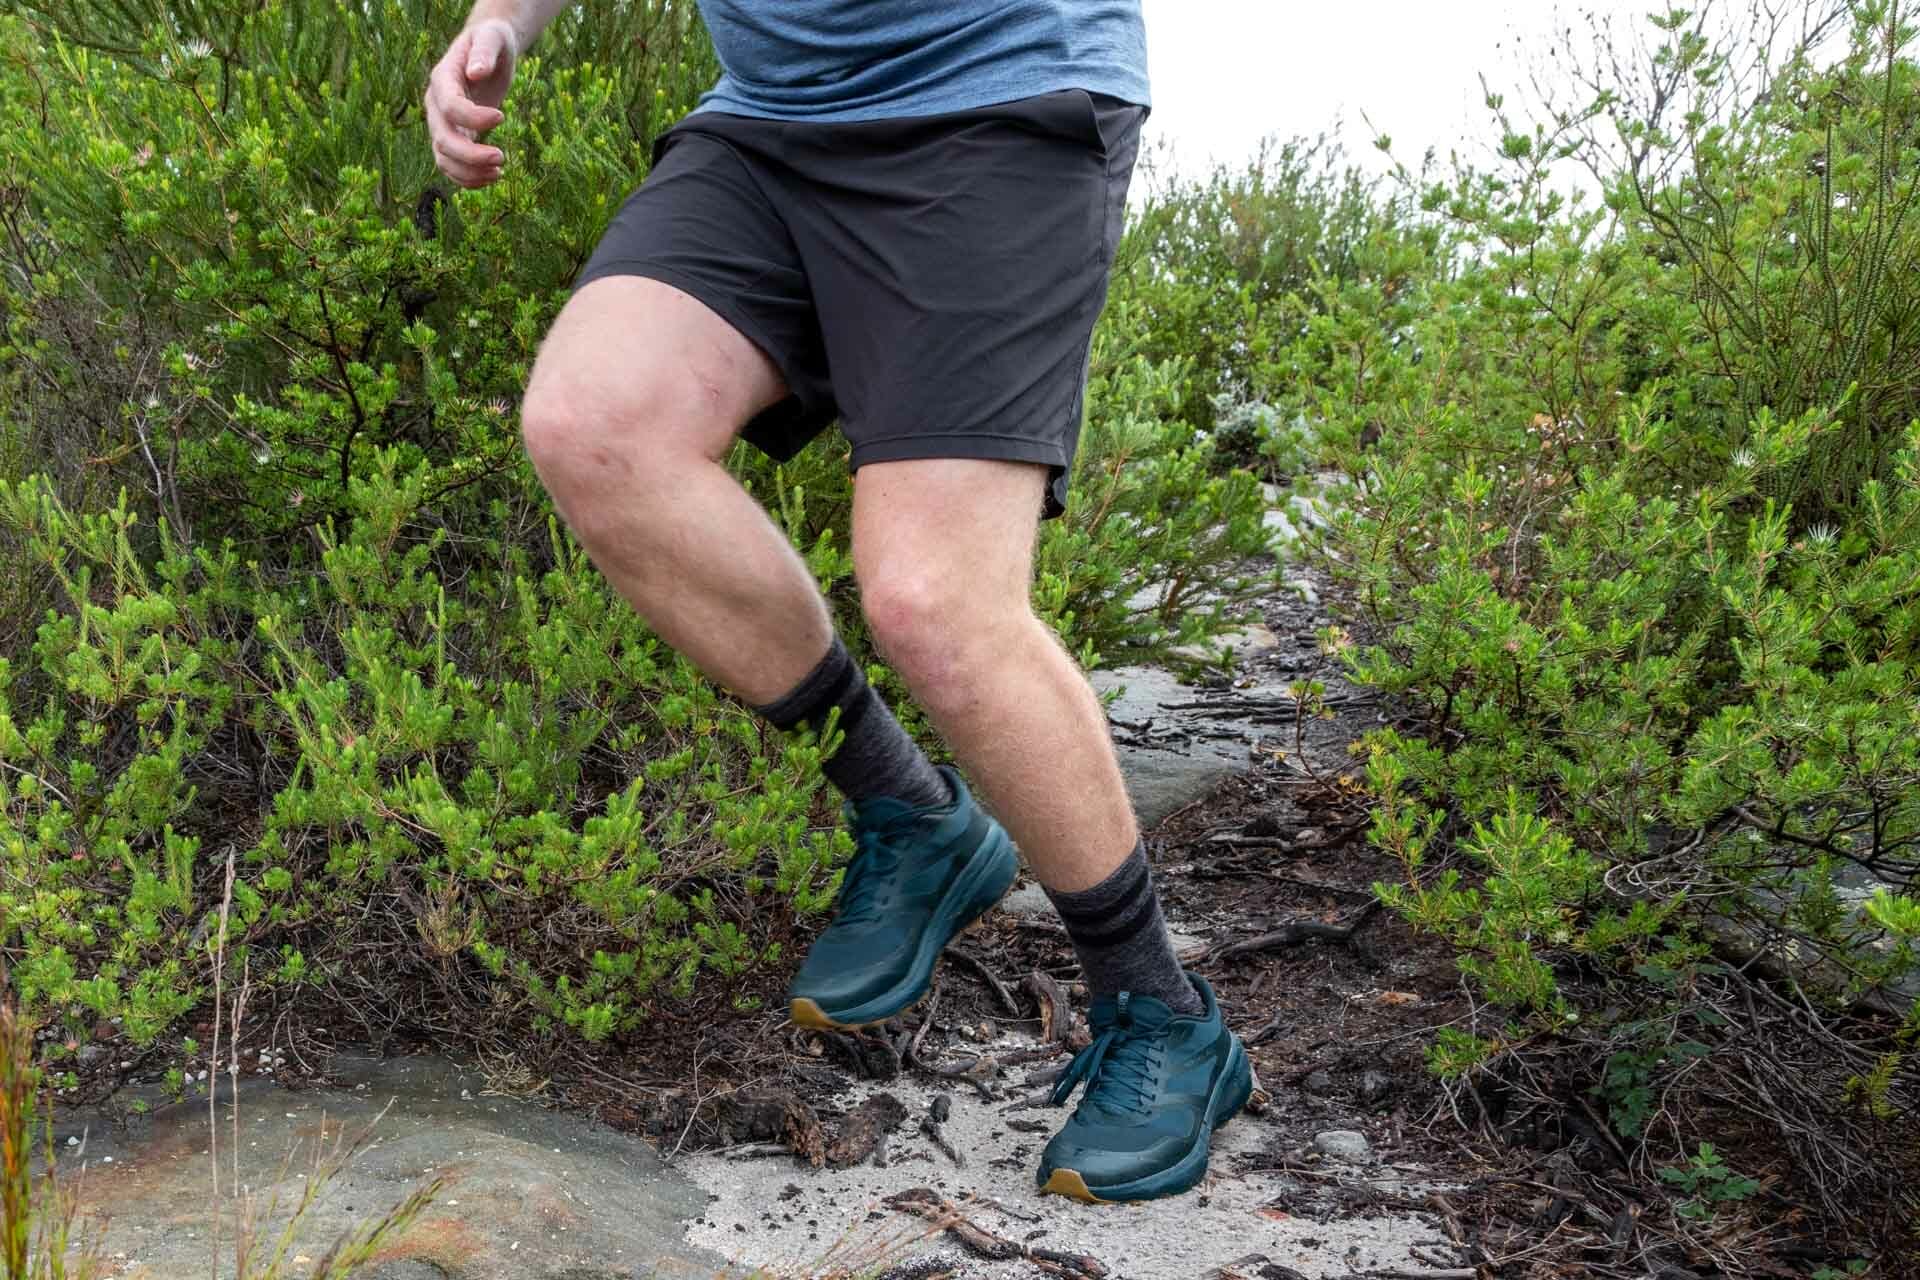 Arc'teryx's Trail-Running Shoes Hit Their Stride